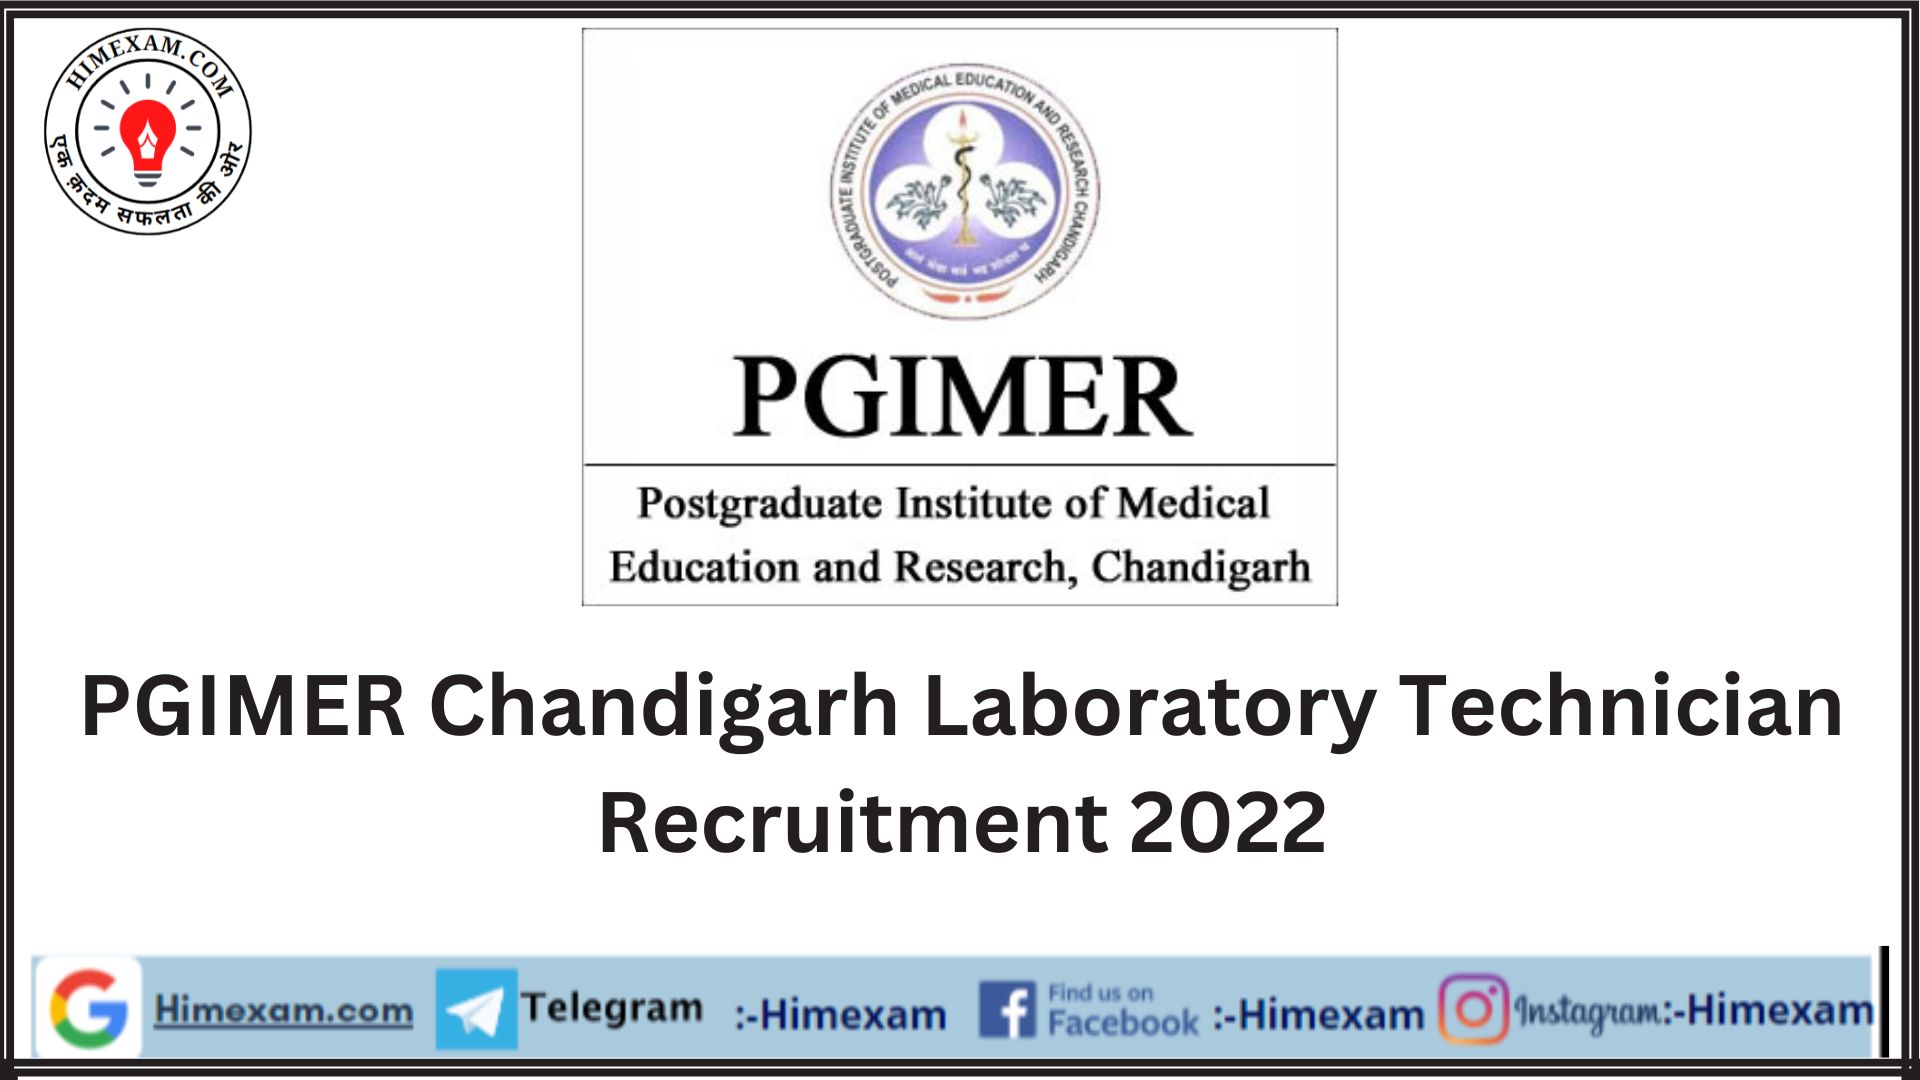 PGIMER Chandigarh Laboratory Technician Recruitment 2022